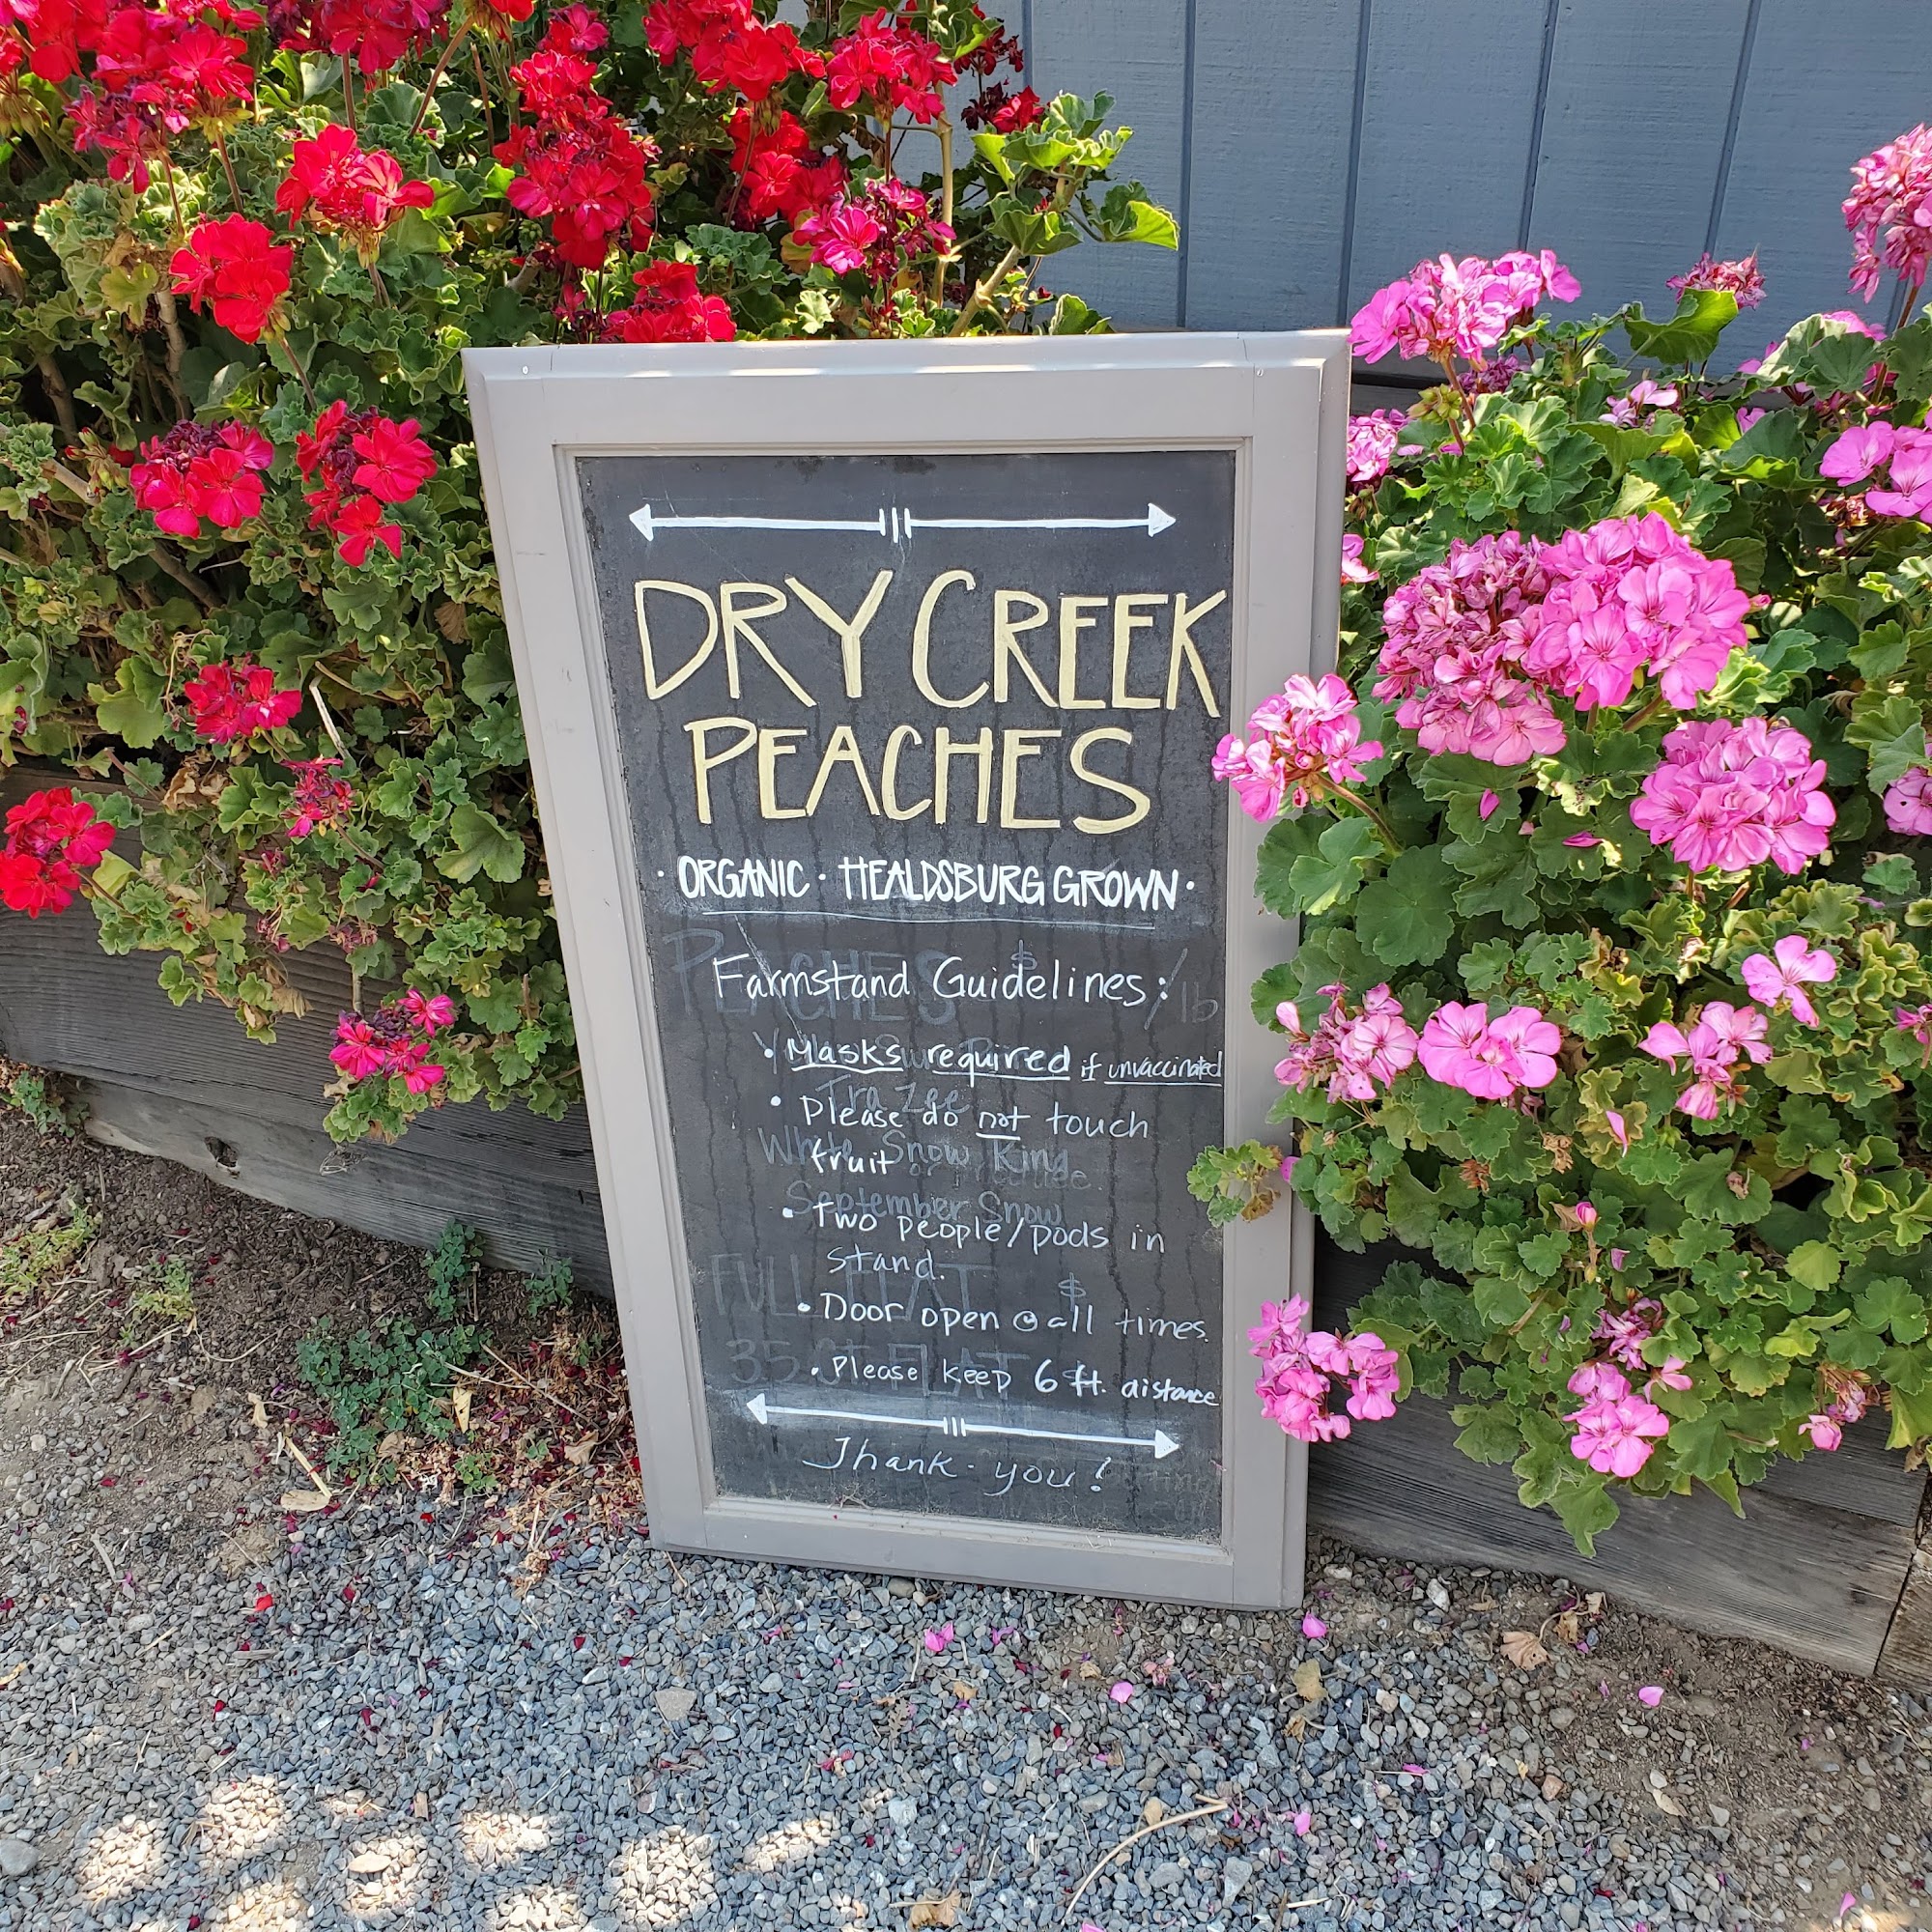 Dry Creek Peach & Produce